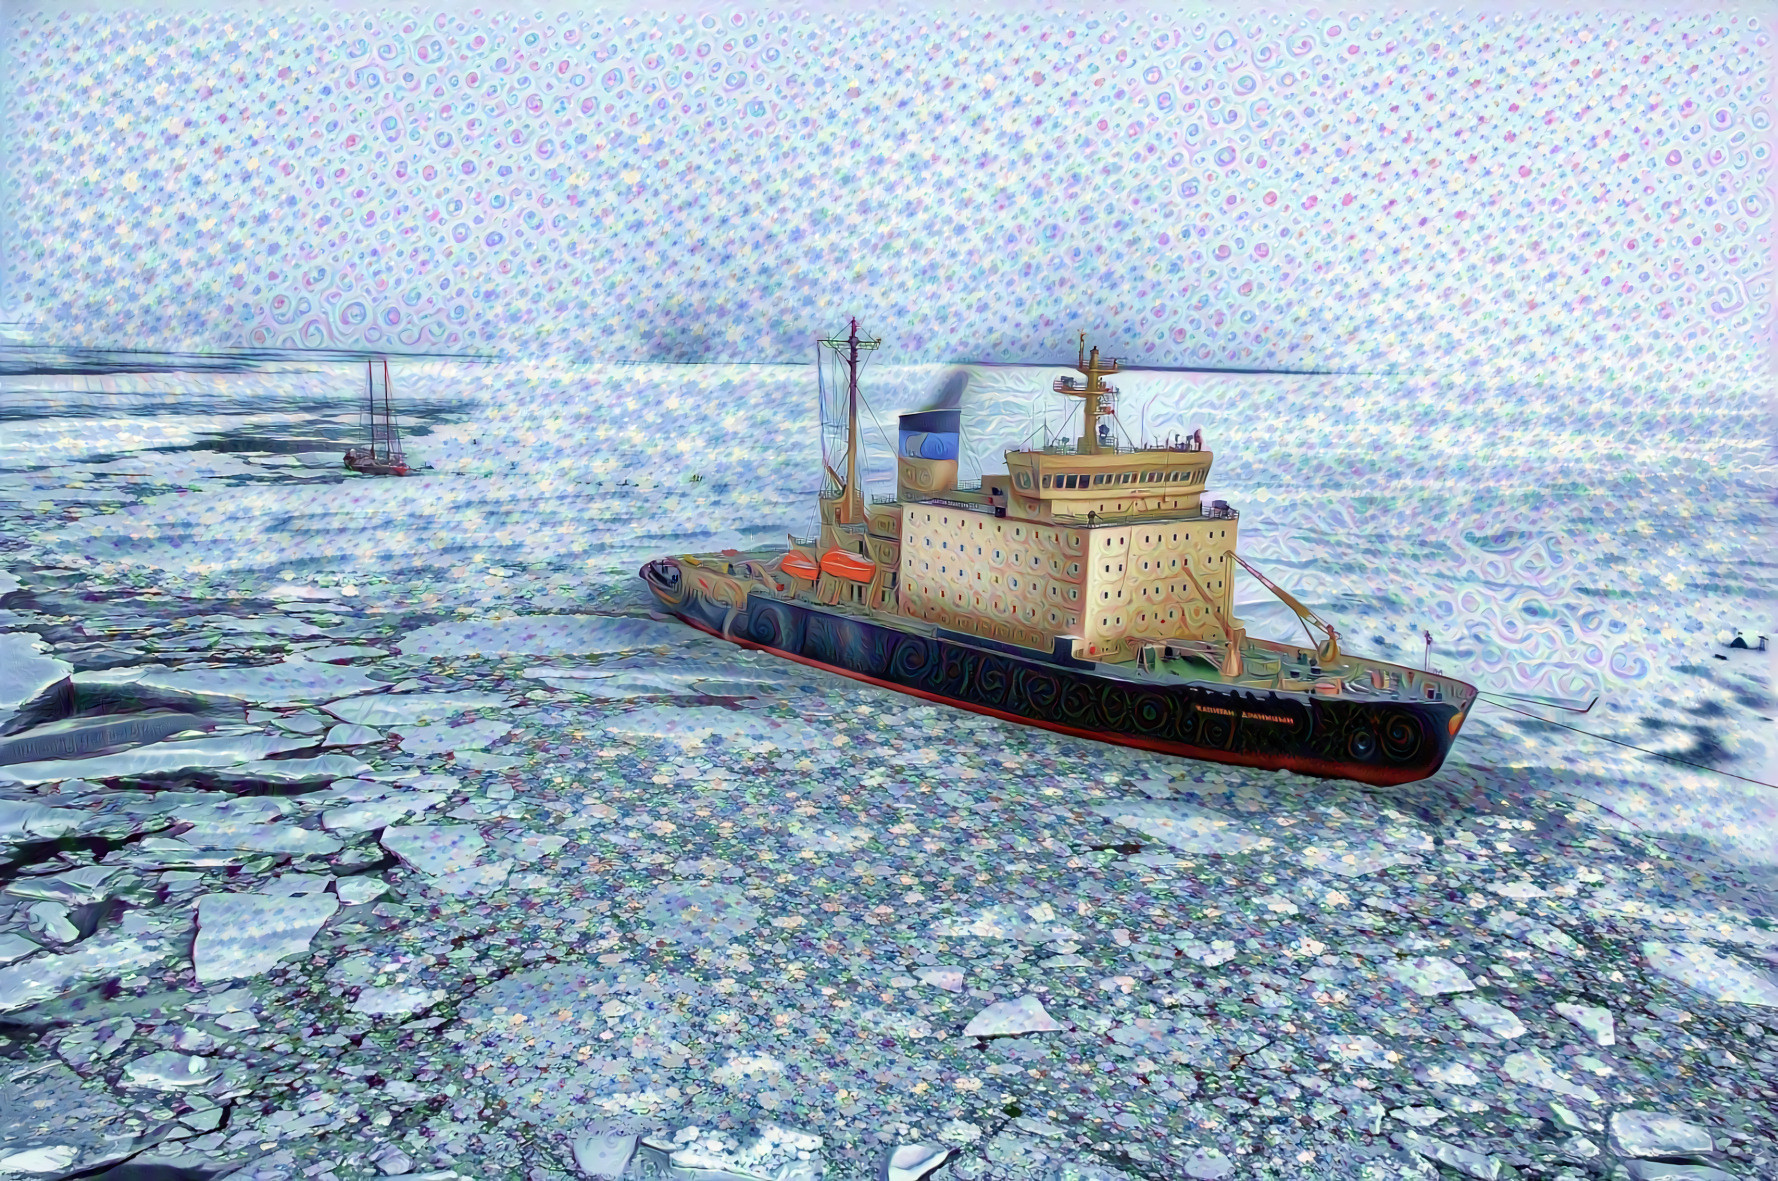 Sea, Ice and Ships